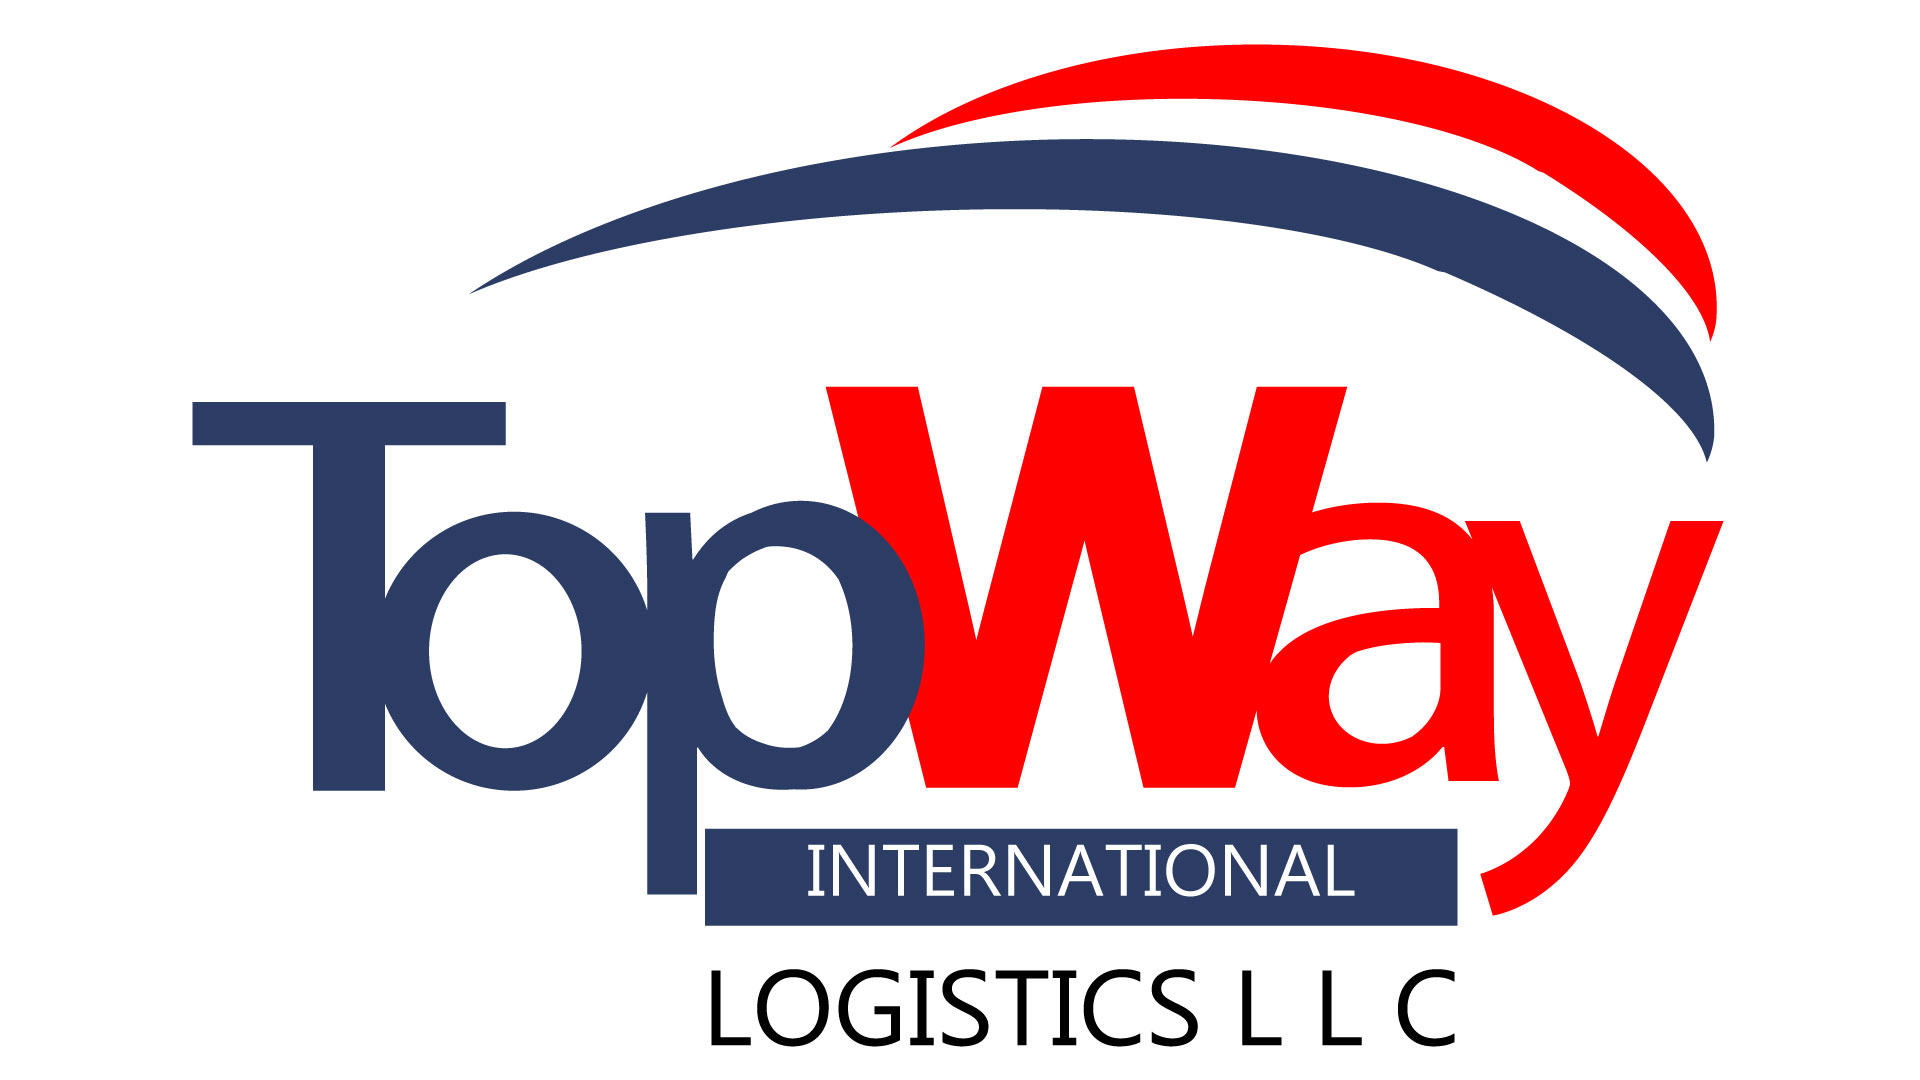 Topway International Logistics